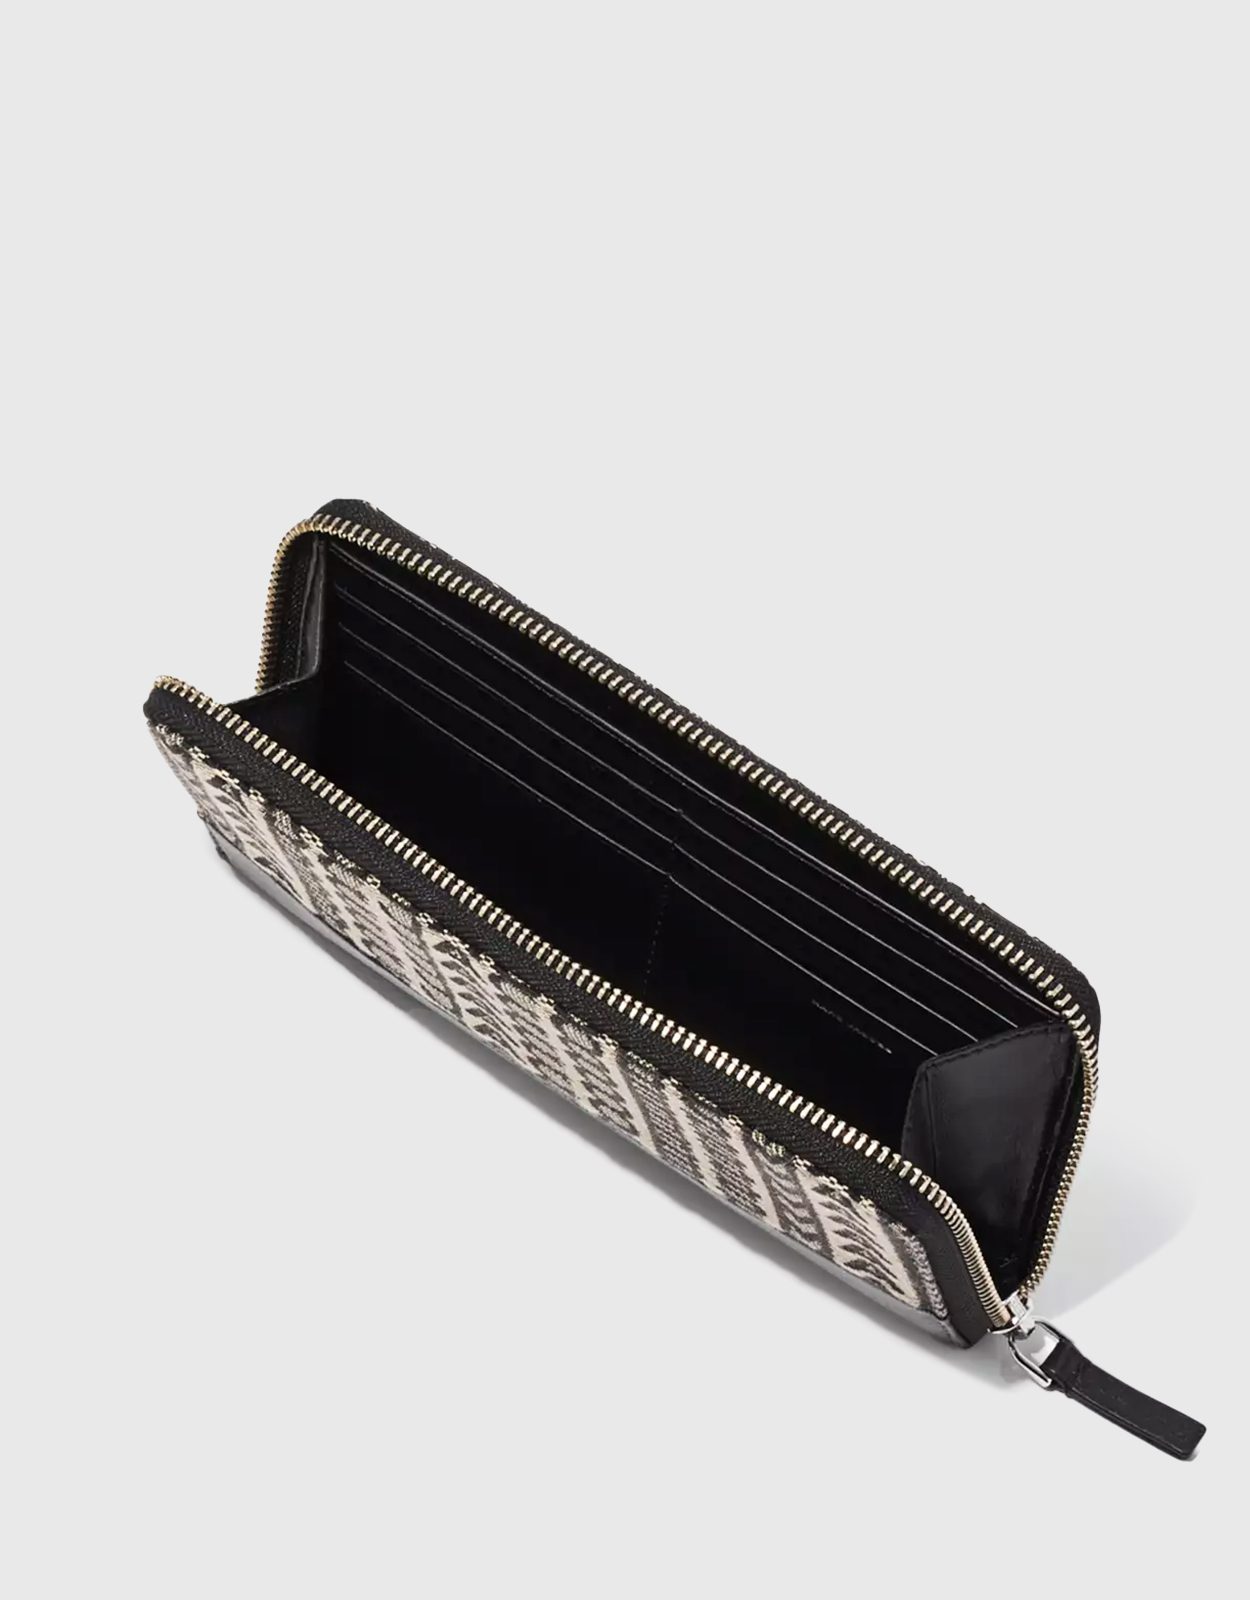 Zipped Long Wallet Beige and Black Dior Oblique Jacquard